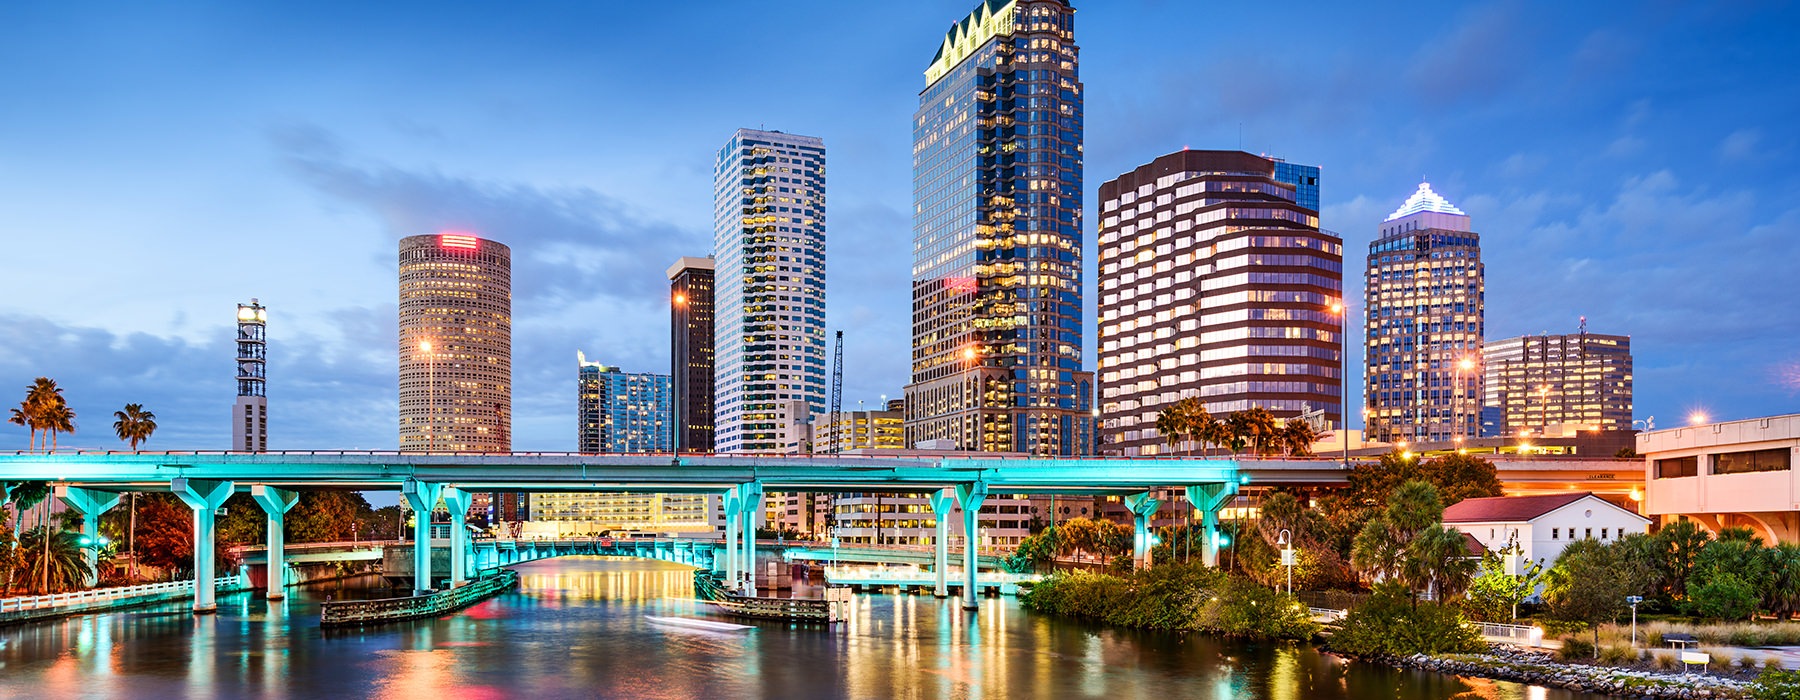 Nighttime skyline shot of Tampa